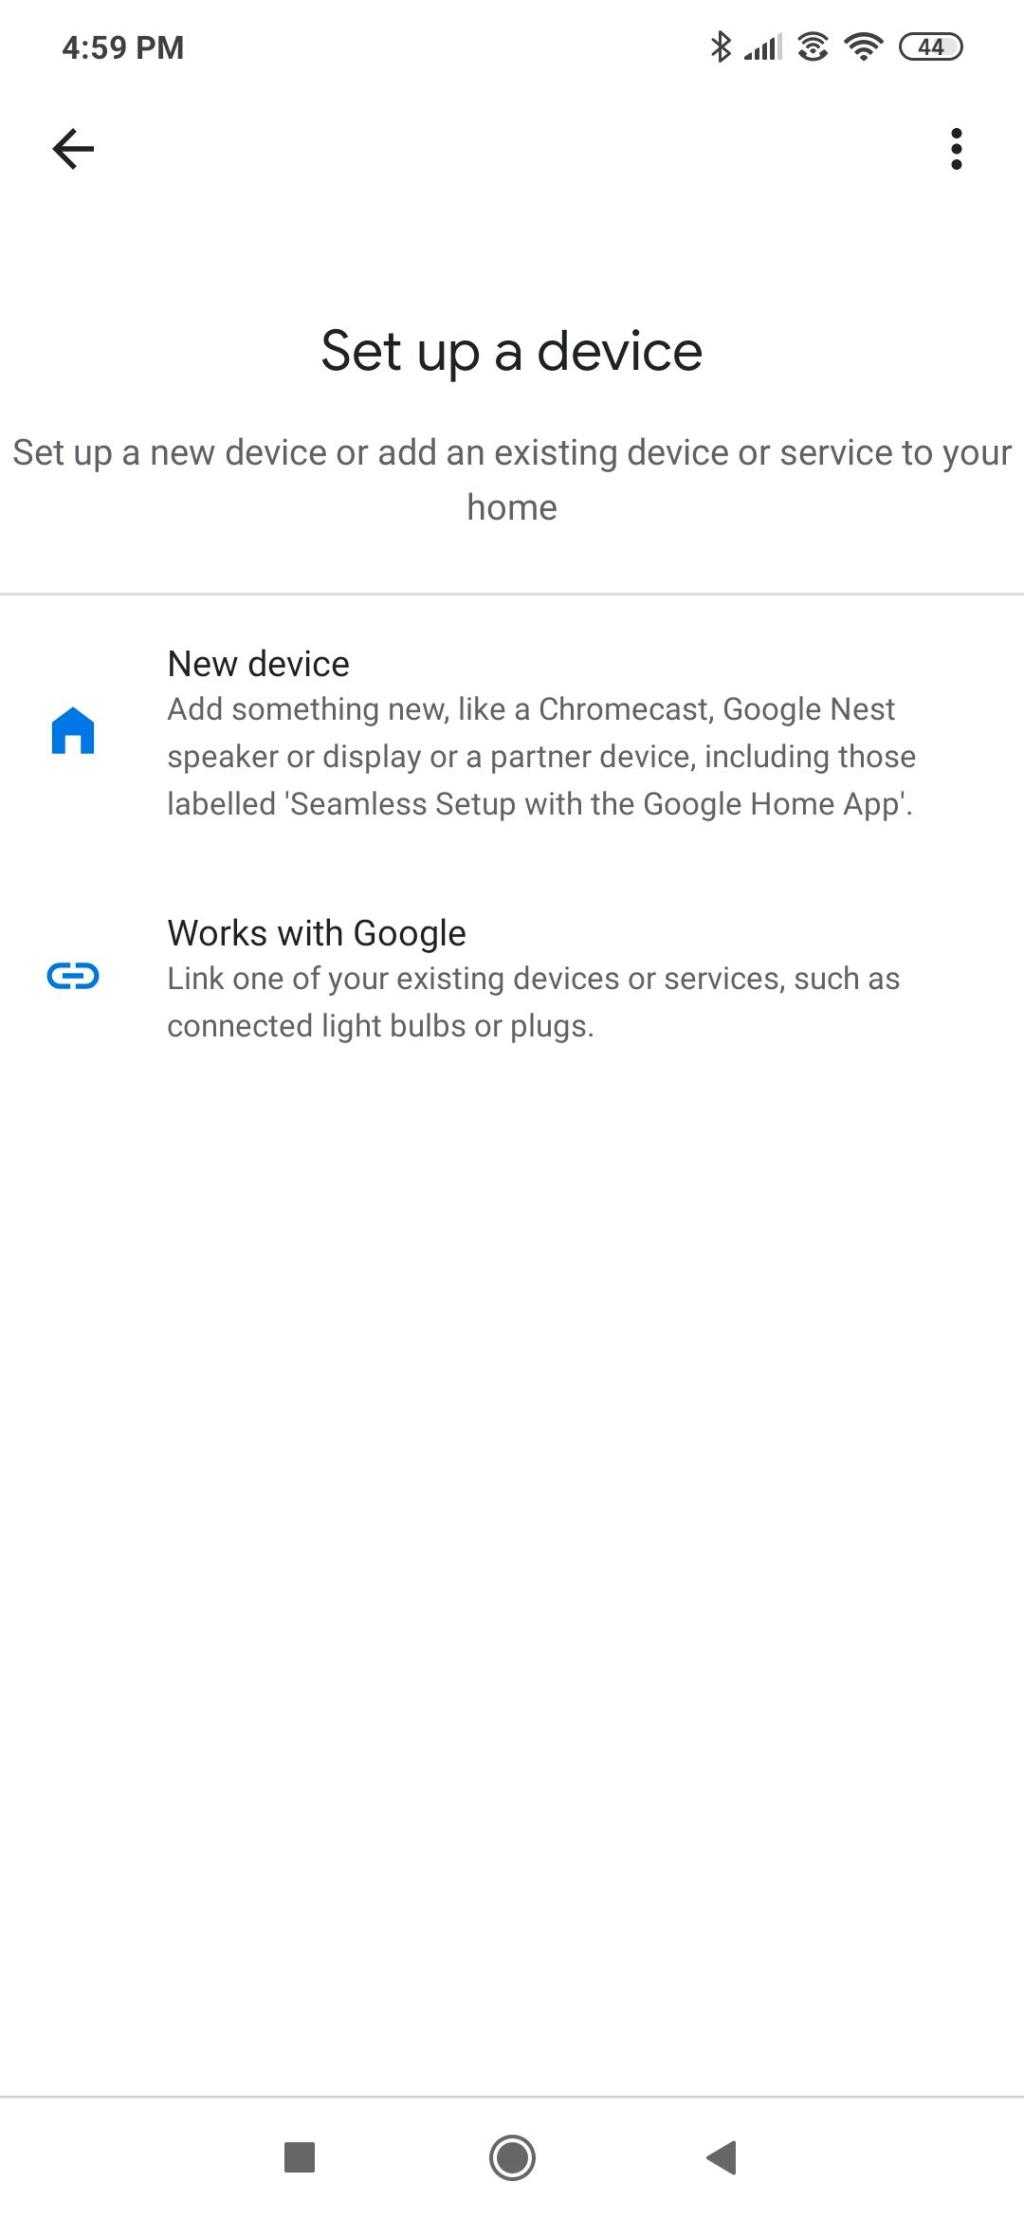 Google Home 앱이란 무엇이며 어떤 용도로 사용되나요?